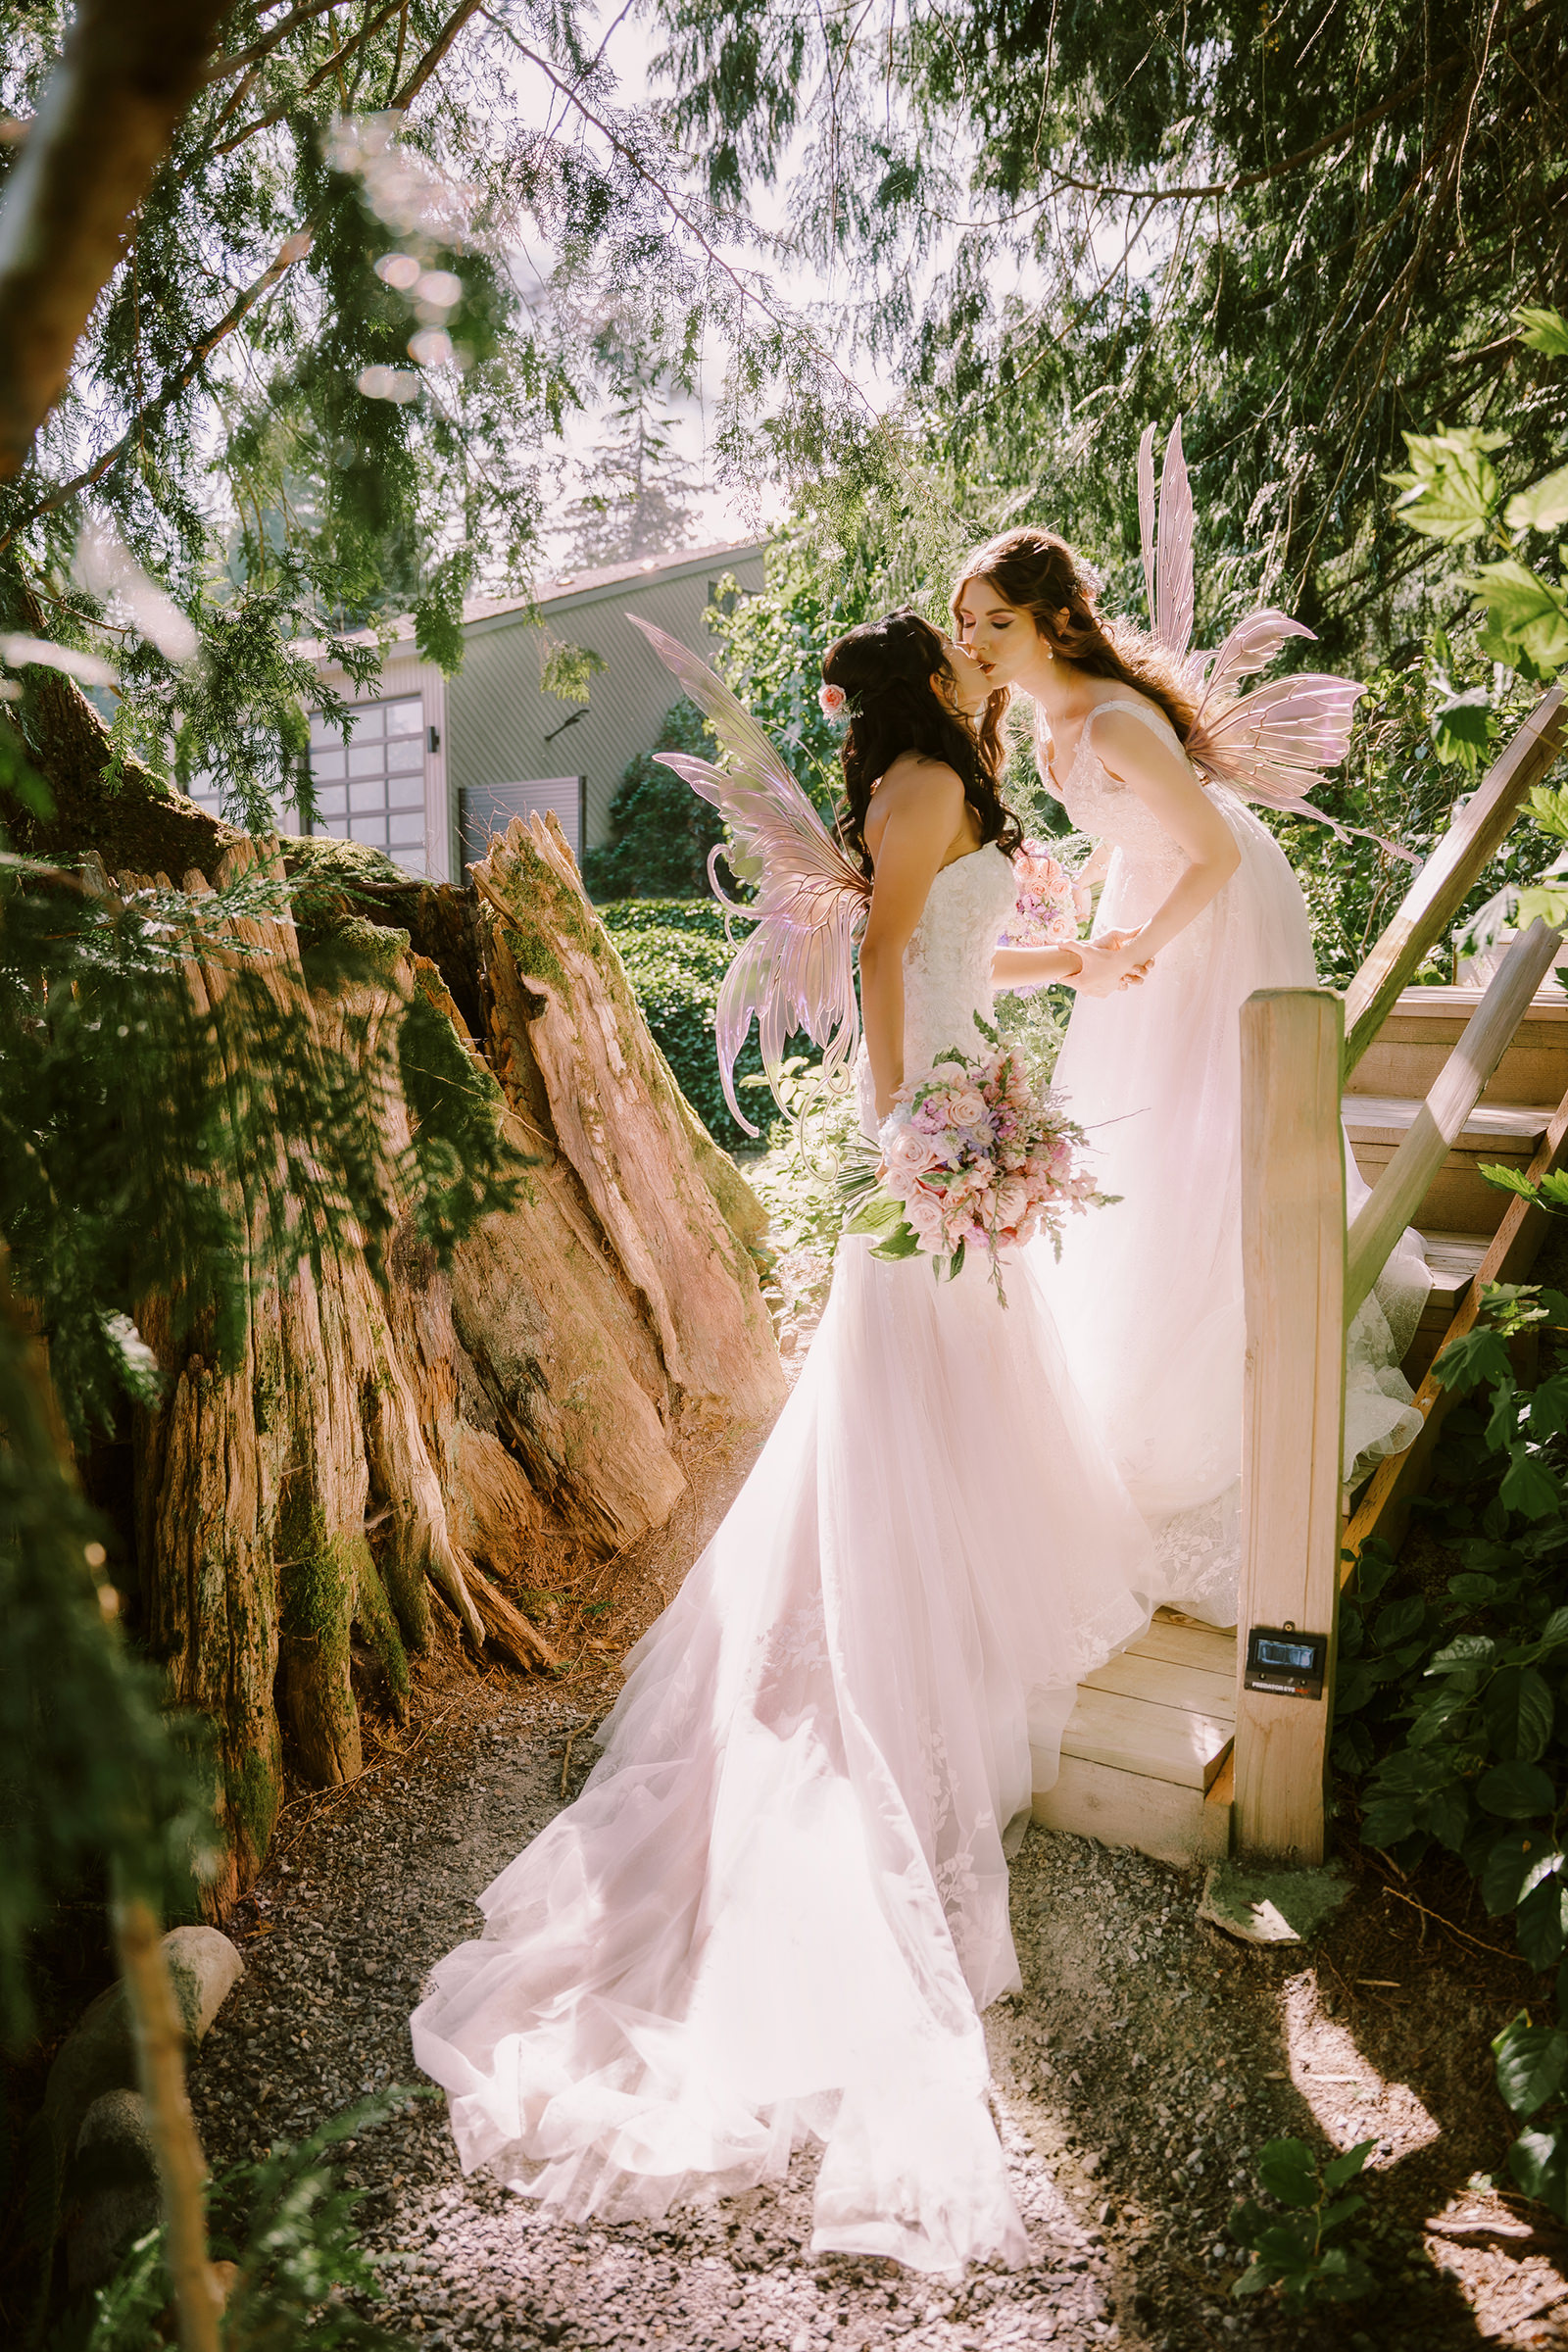 Megan and Erika's wedding photos at Graybridge Venue in Snohomish WA, summer 2022